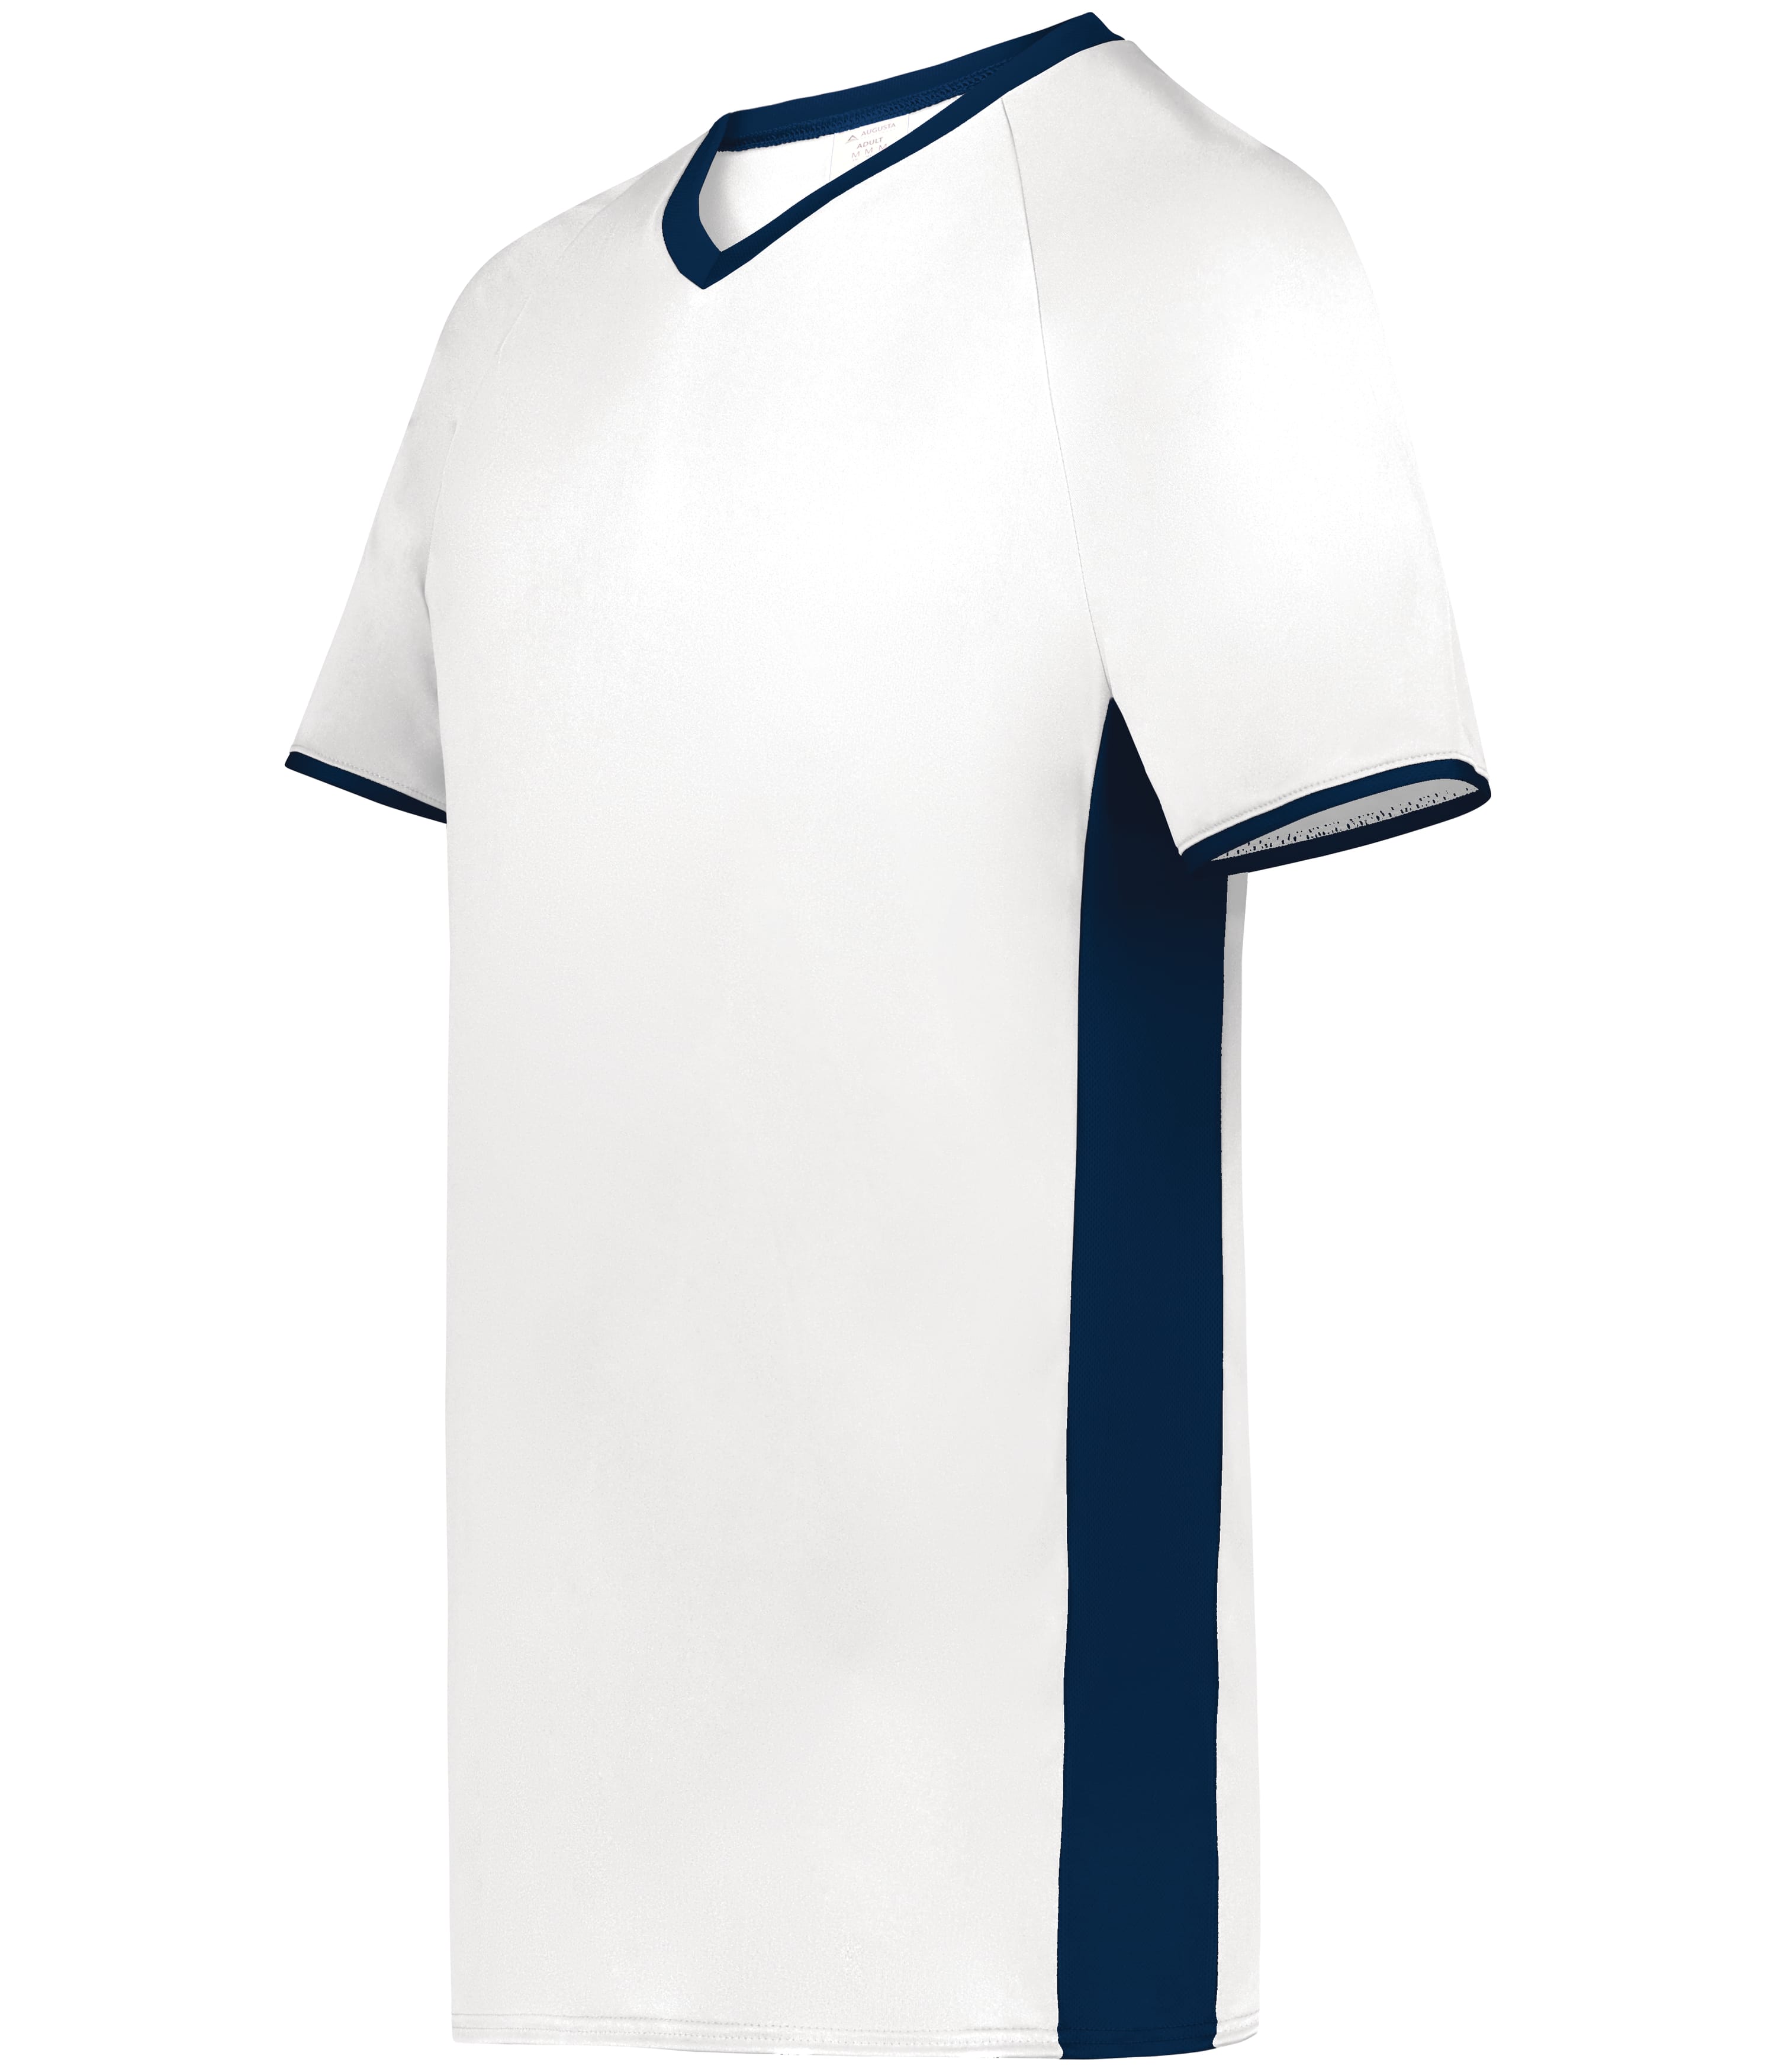 Augusta Sportswear 422 - Toddler Baseball Jersey - White/Navy - 4T